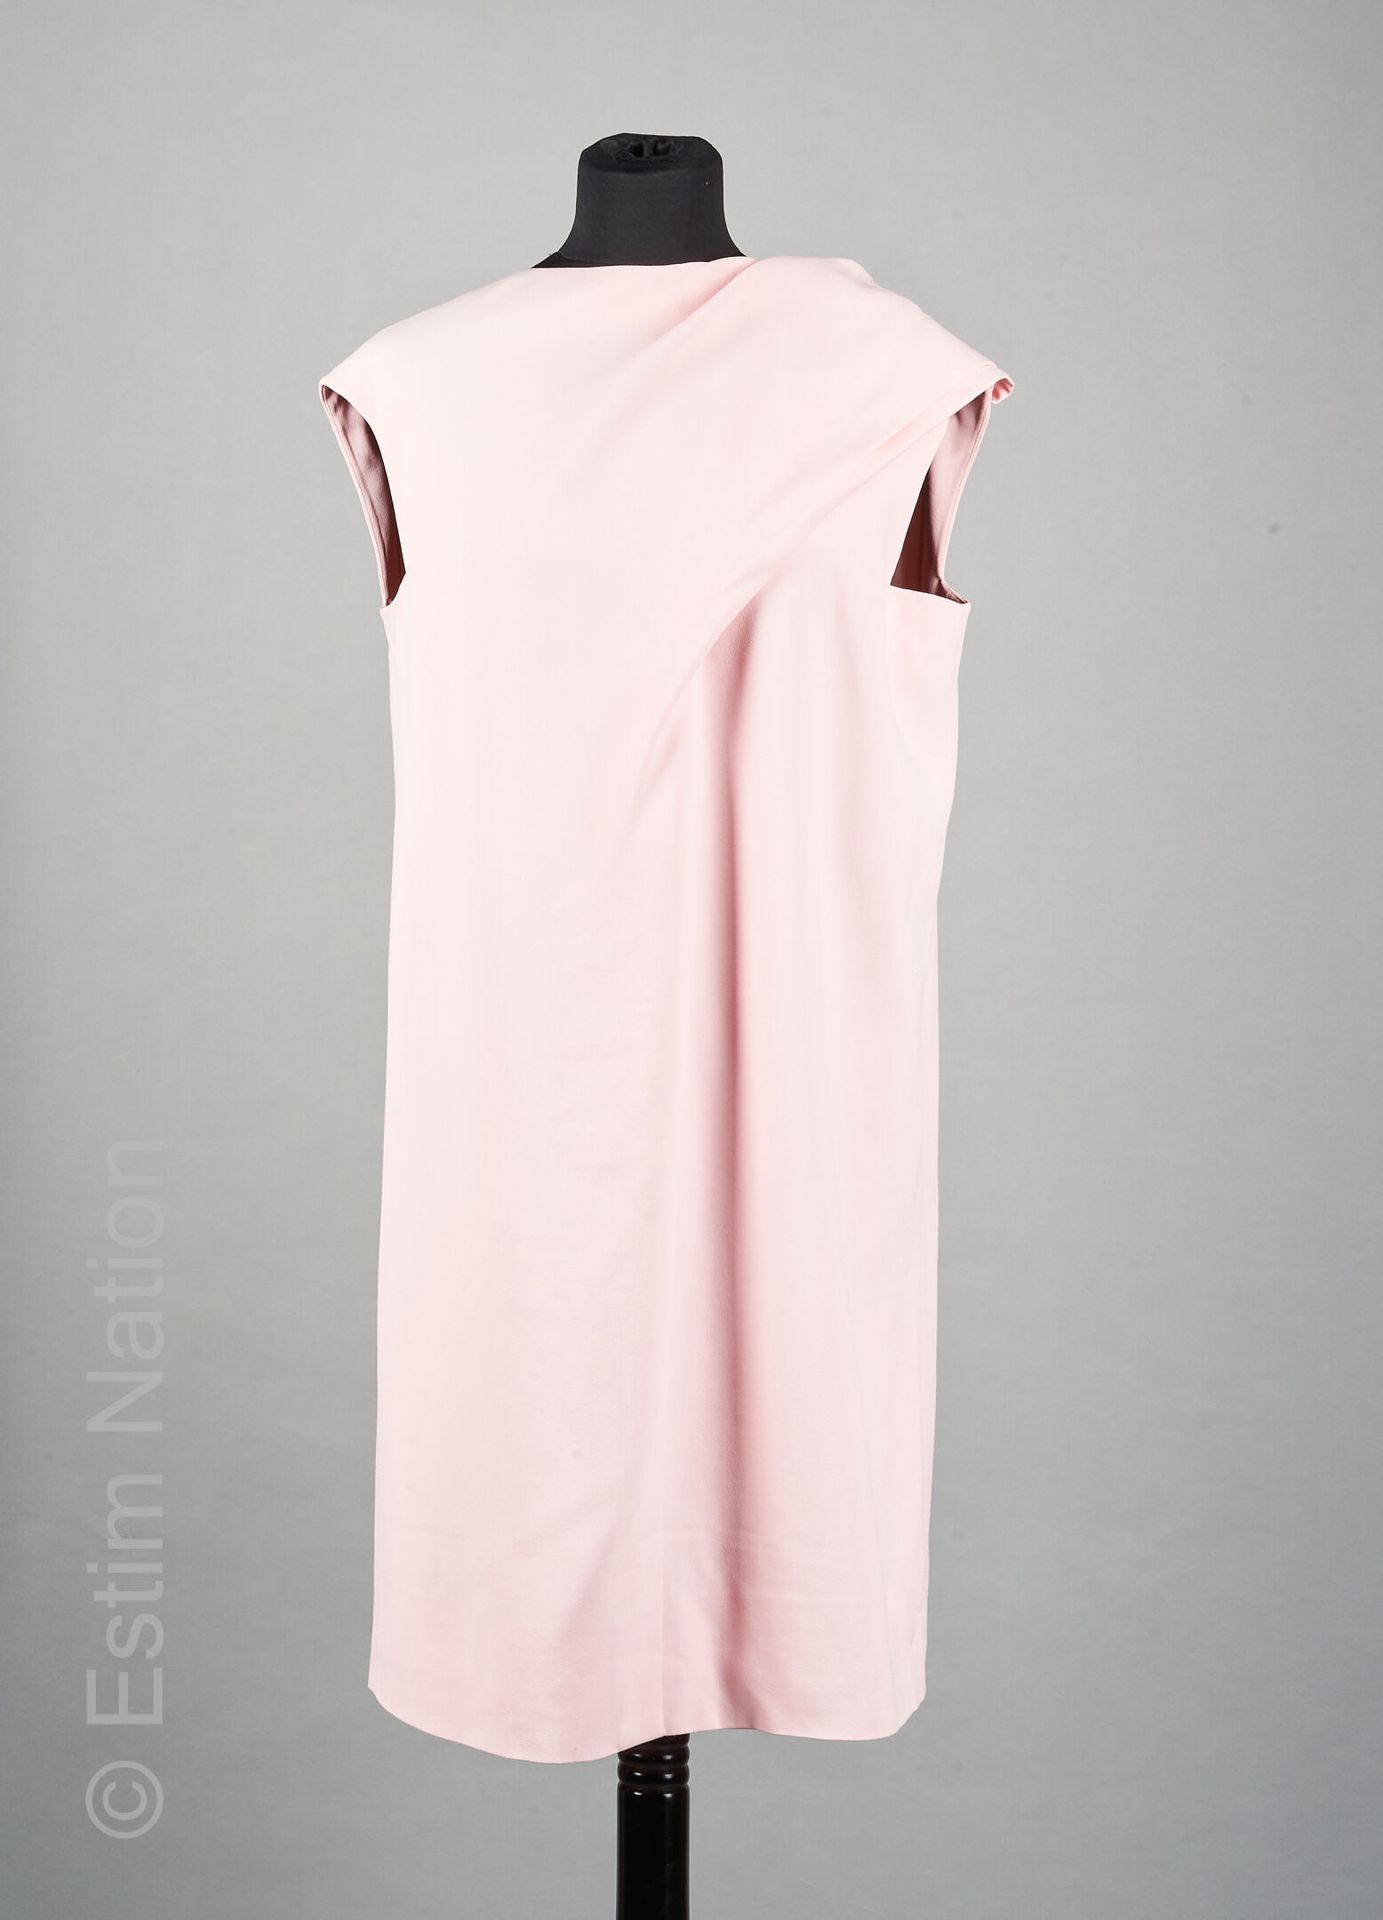 BALENCIAGA PAR ALEXANDER WANG (2013) Pale pink acetate and rayon crepe dress wit&hellip;